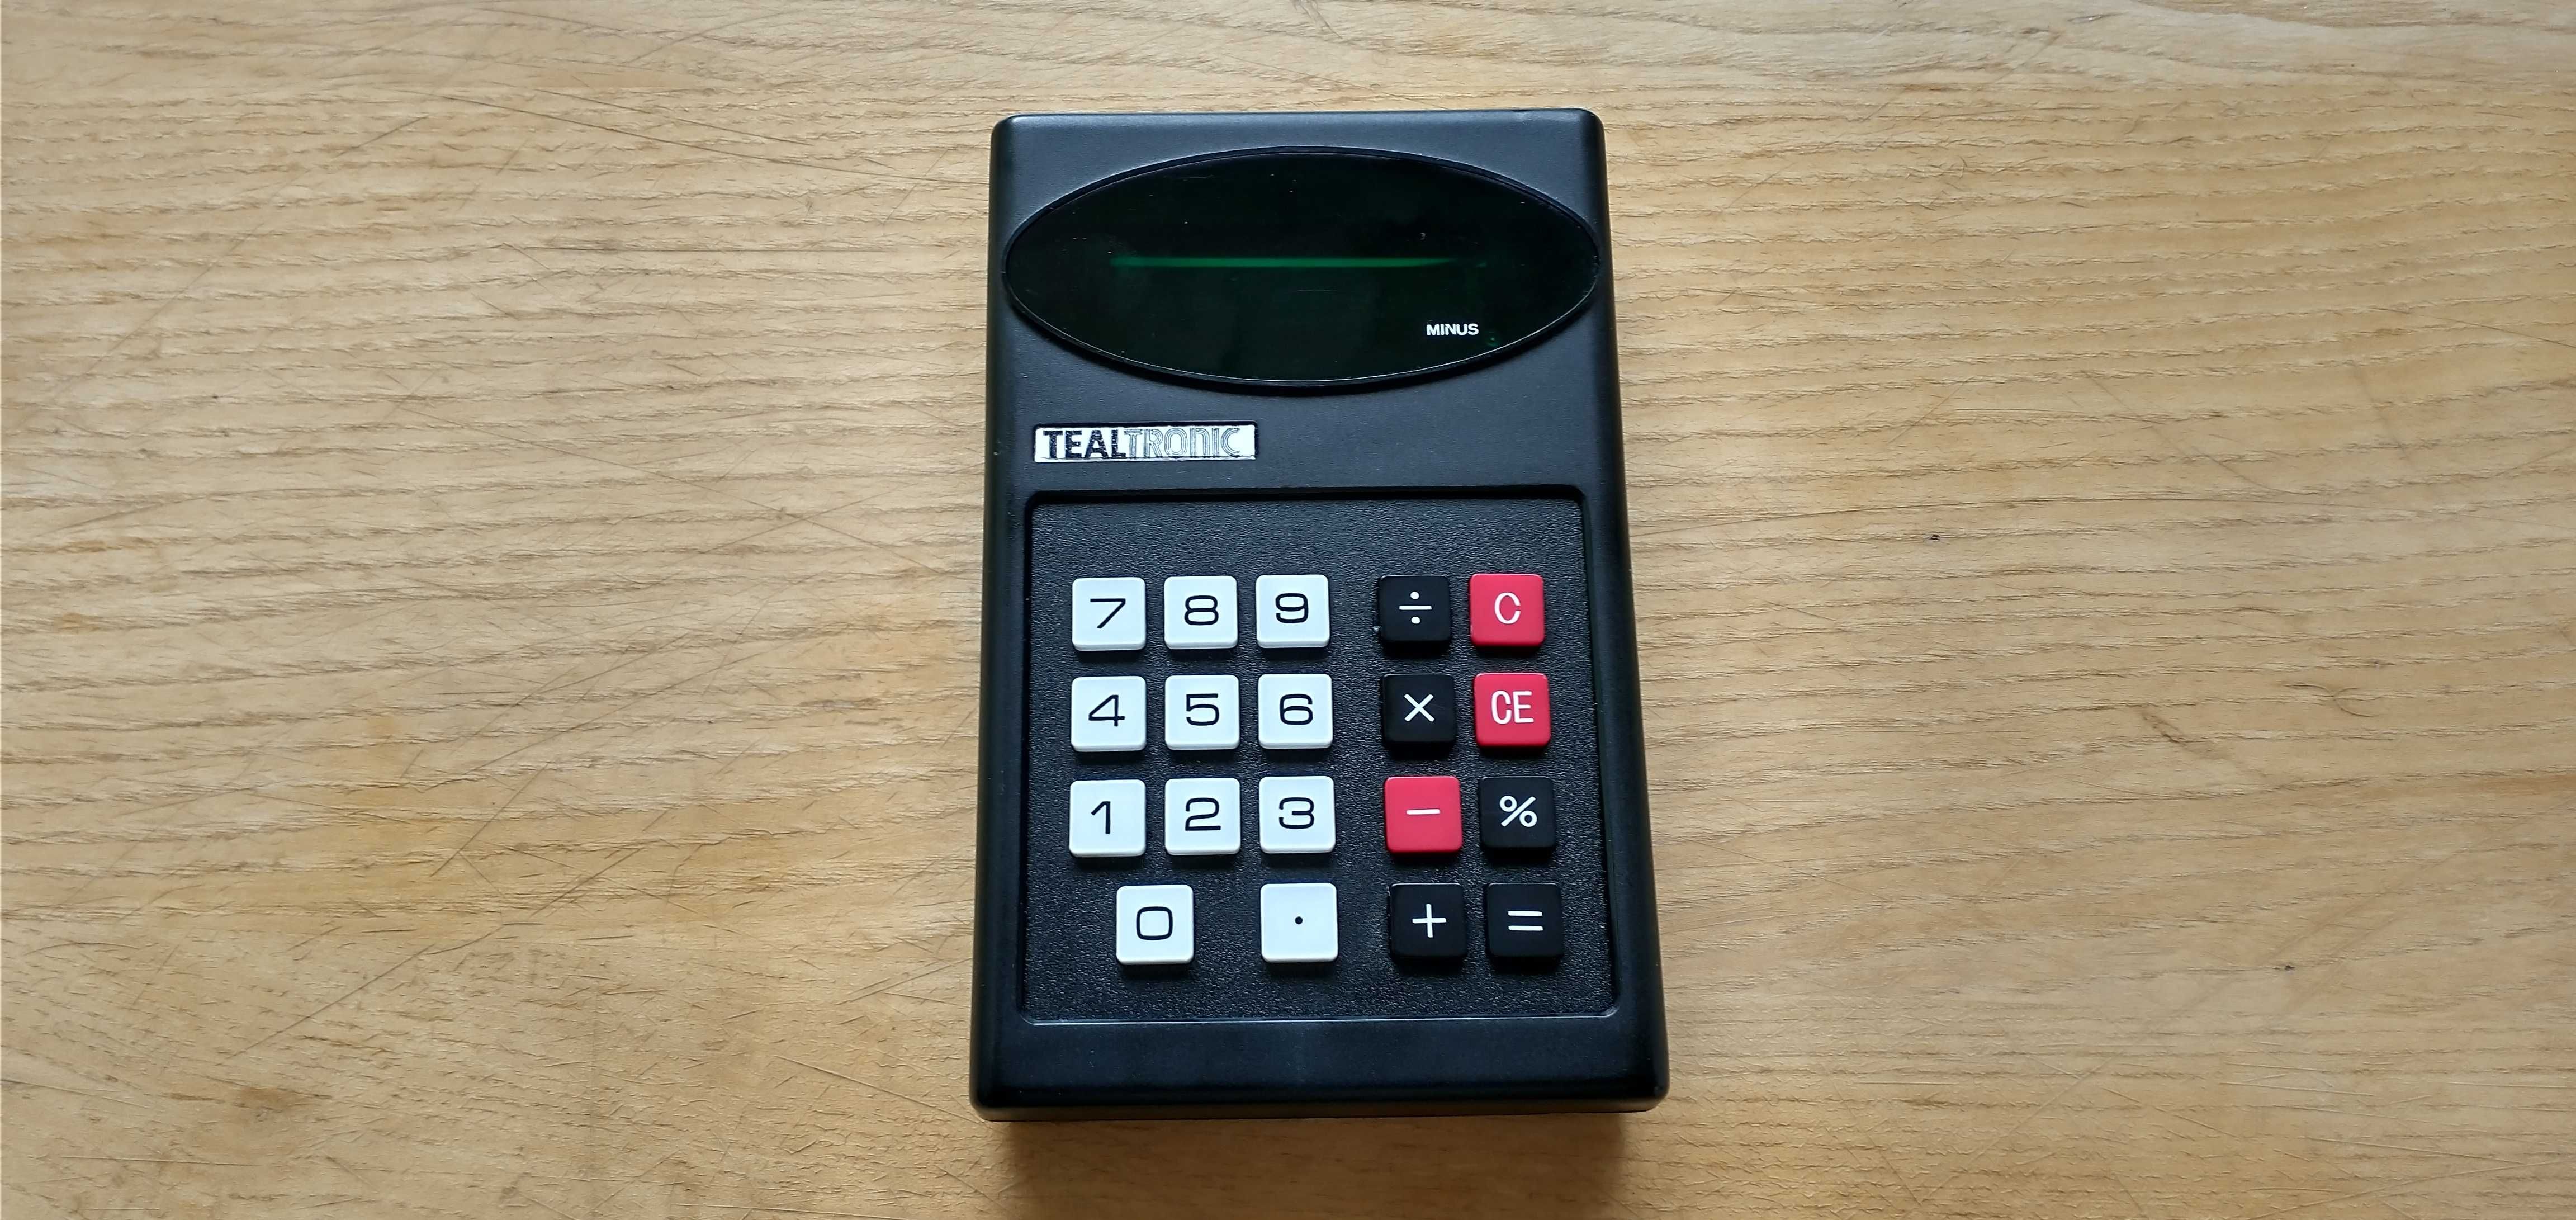 Vand calculator electronic TEALTRONIC model T008 - Japan 1975